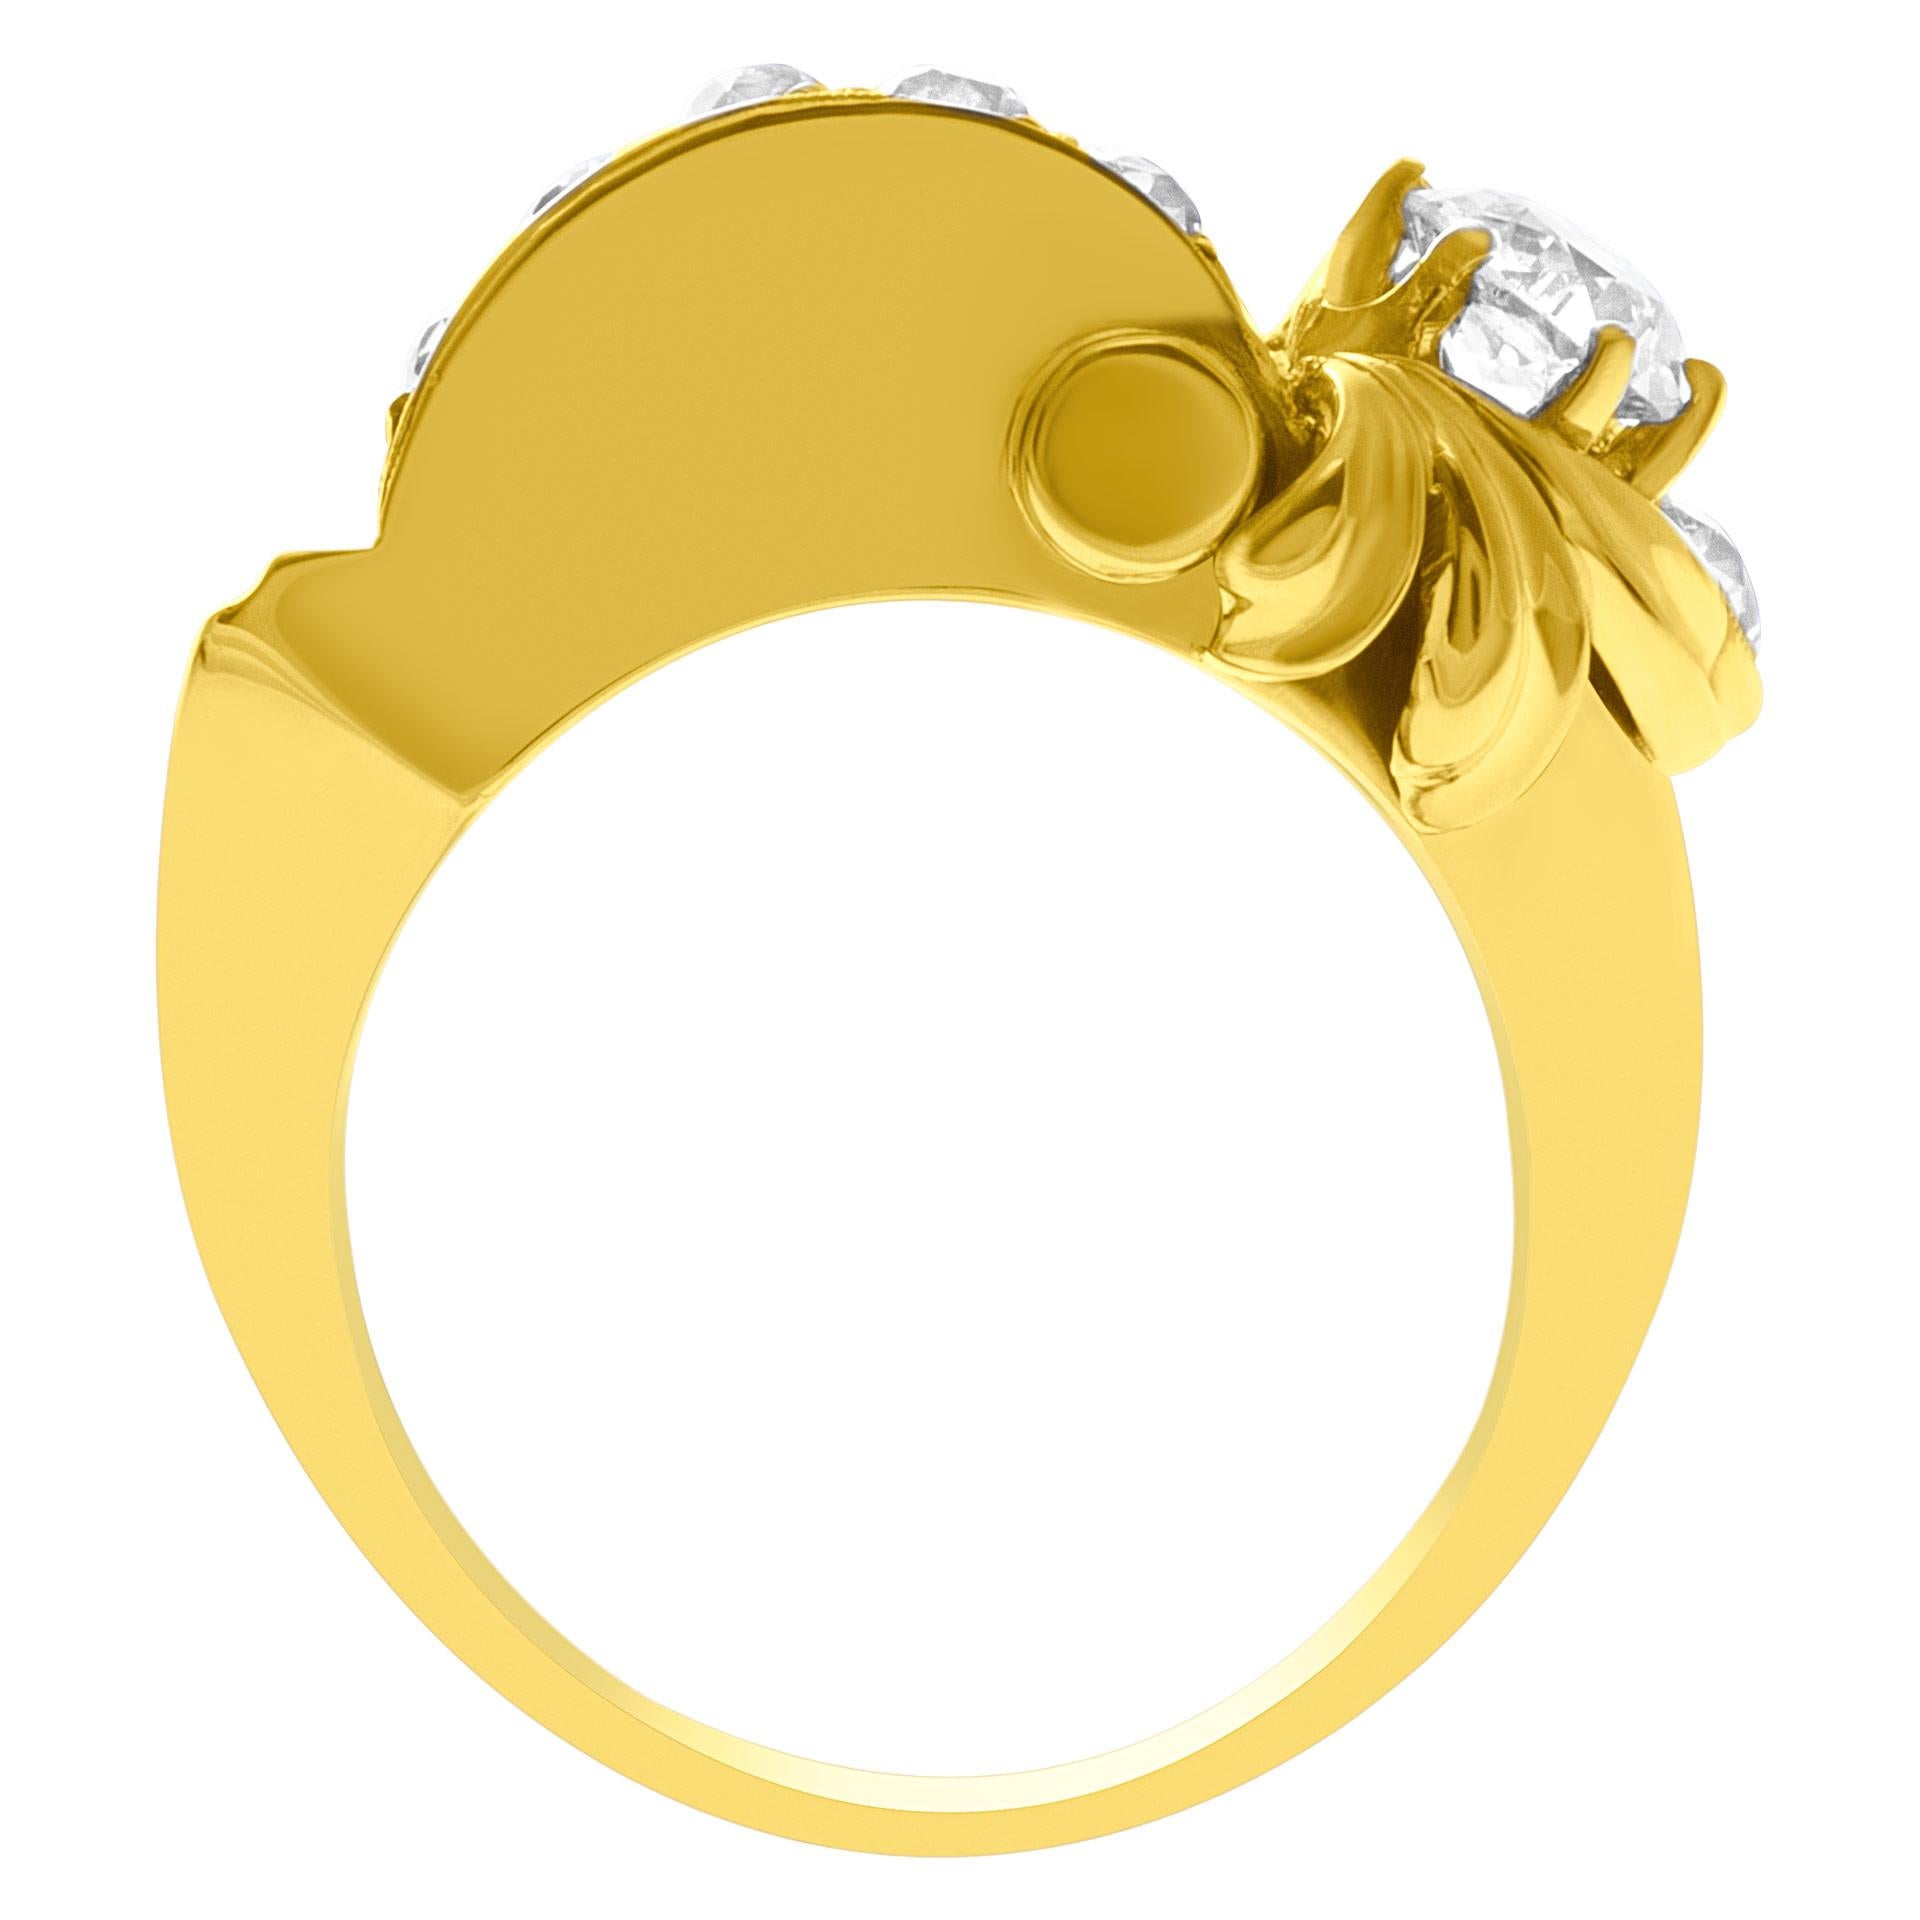 Women's or Men's Old European Cut Diamond Ring in 18k Yellow Gold